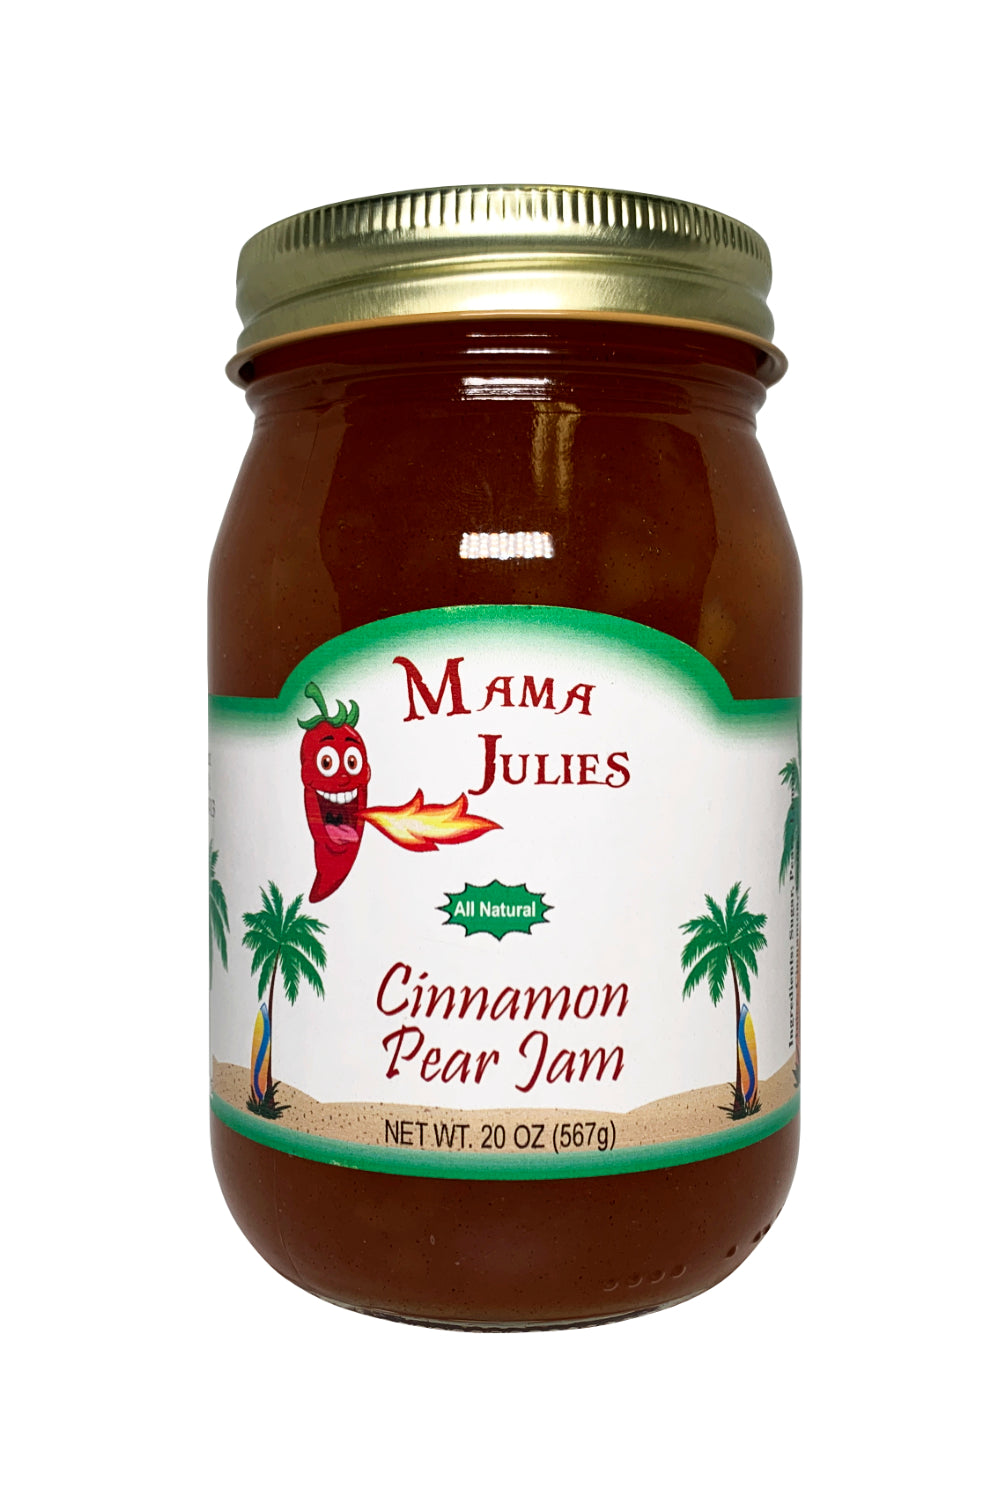 Mama Julie's Cinnamon Pear Jam